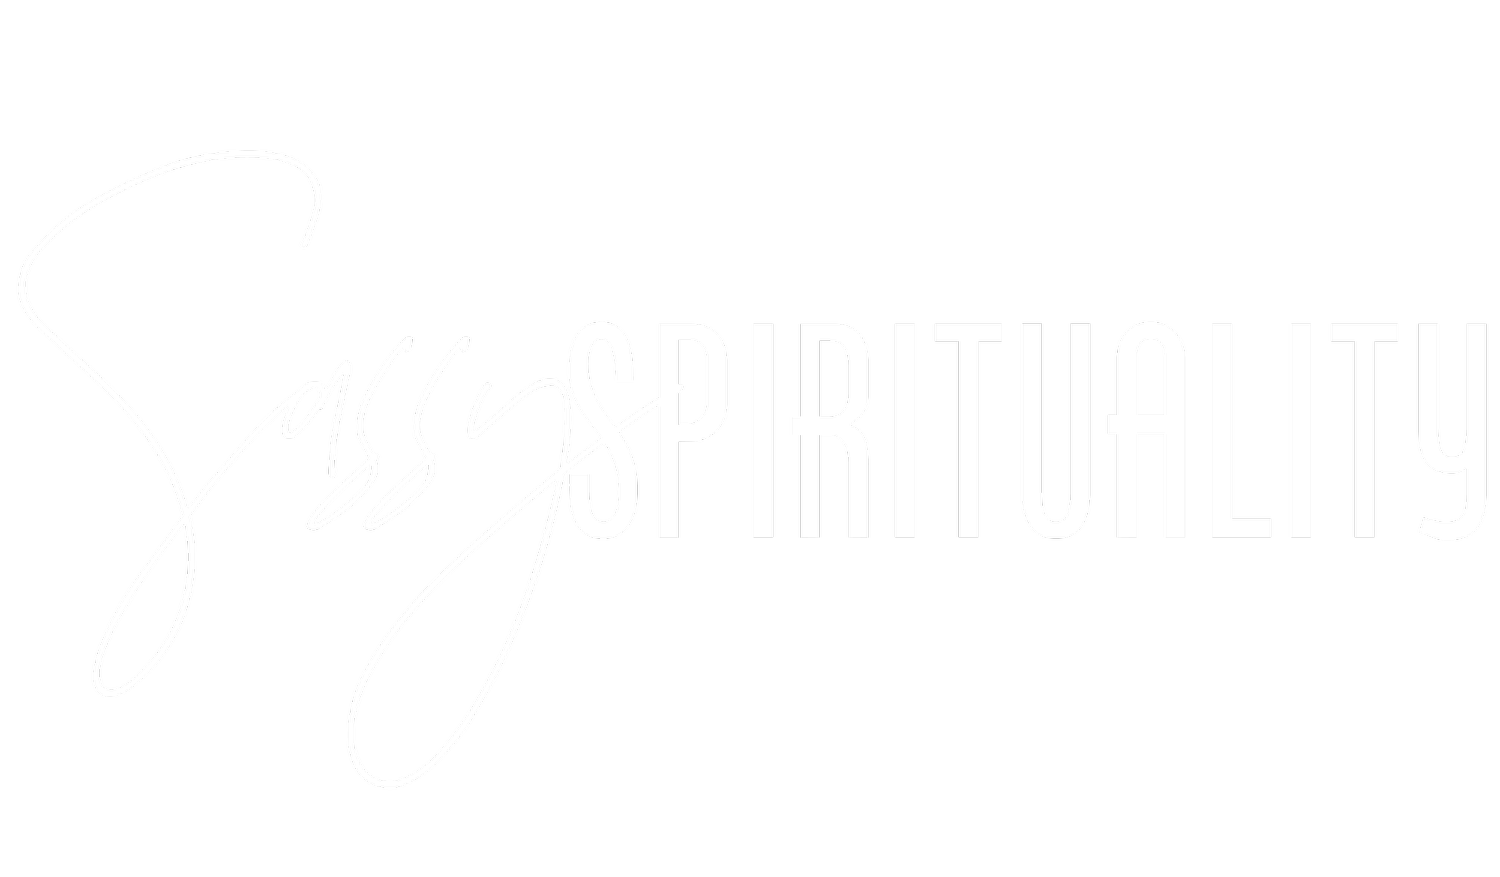 Sassy Spirituality Inc.